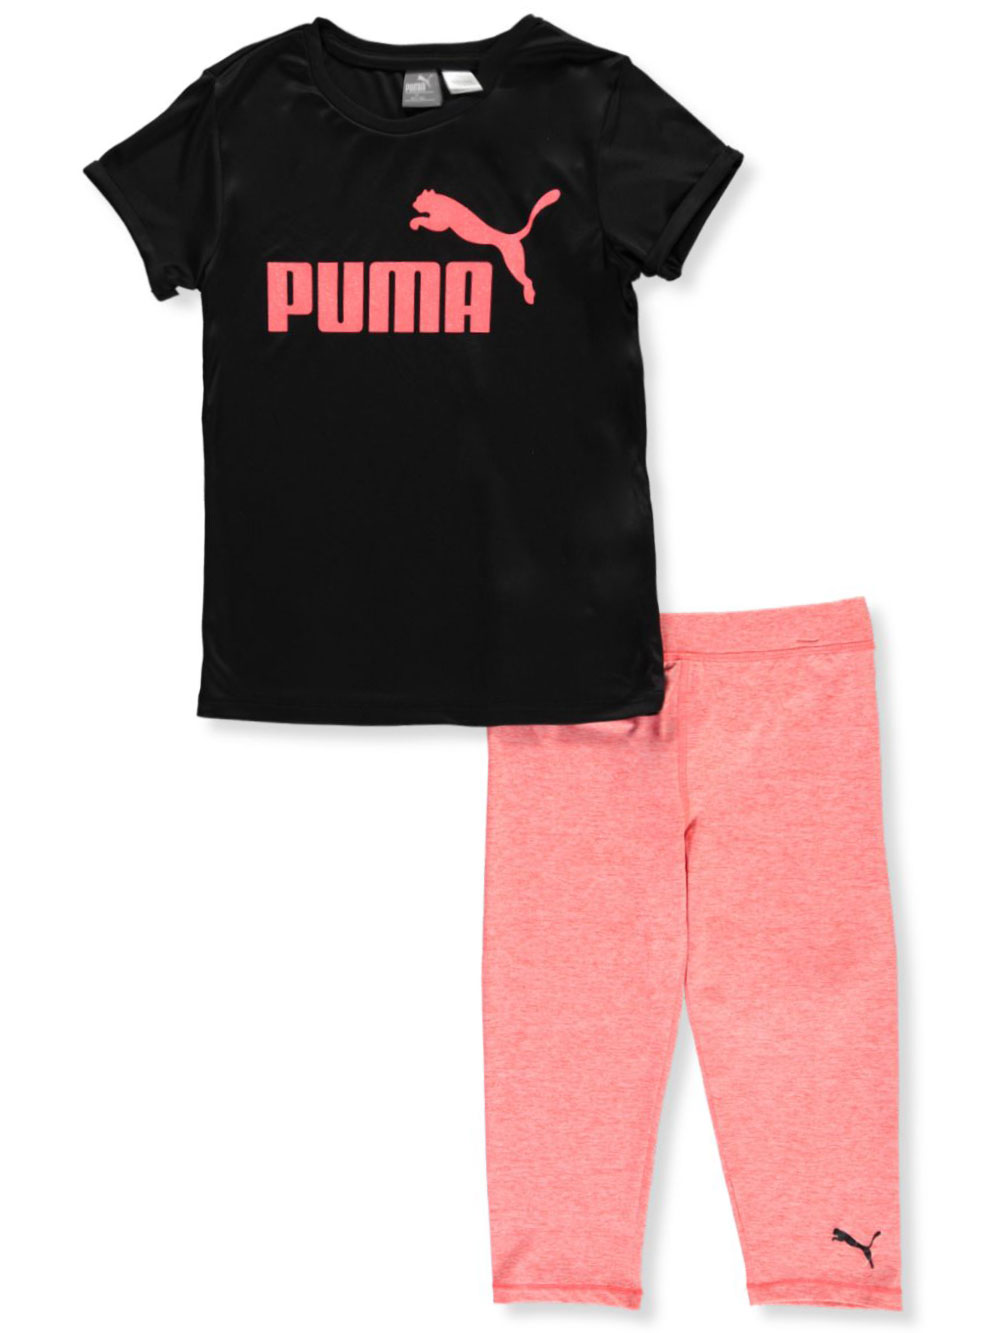 puma outfits for kids